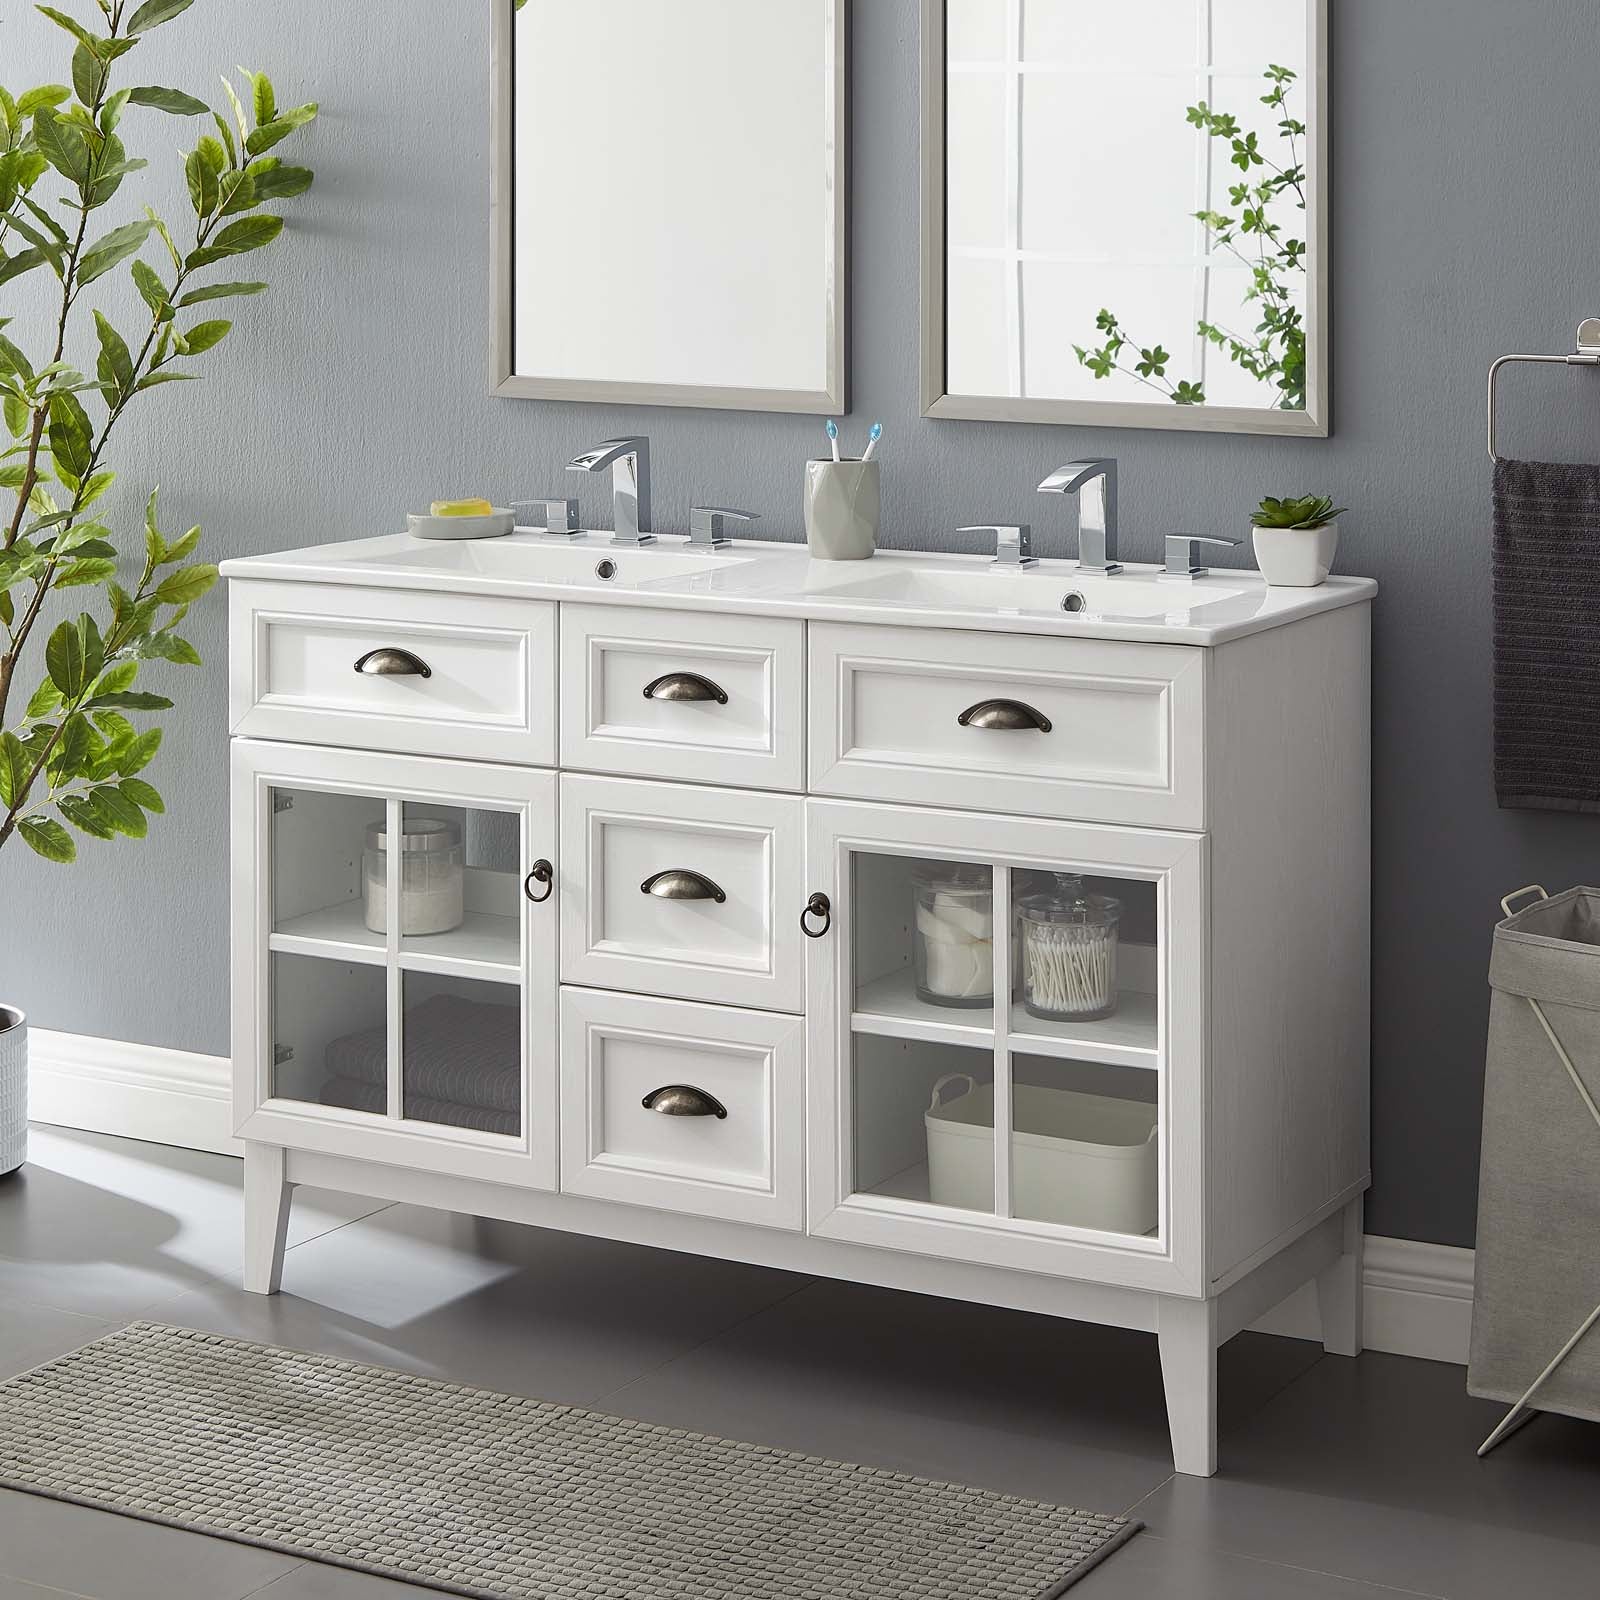 Isle 48" Double Bathroom Vanity Cabinet - East Shore Modern Home Furnishings